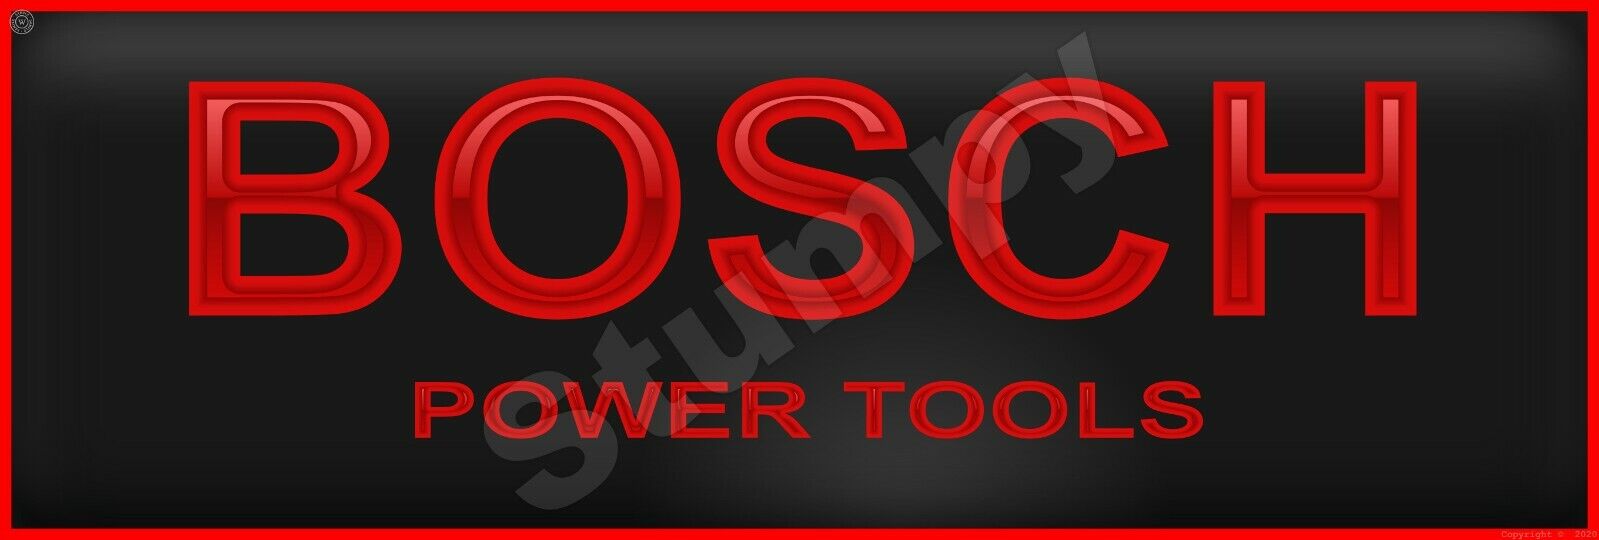 Bosch Power Tools Metal Sign 6\